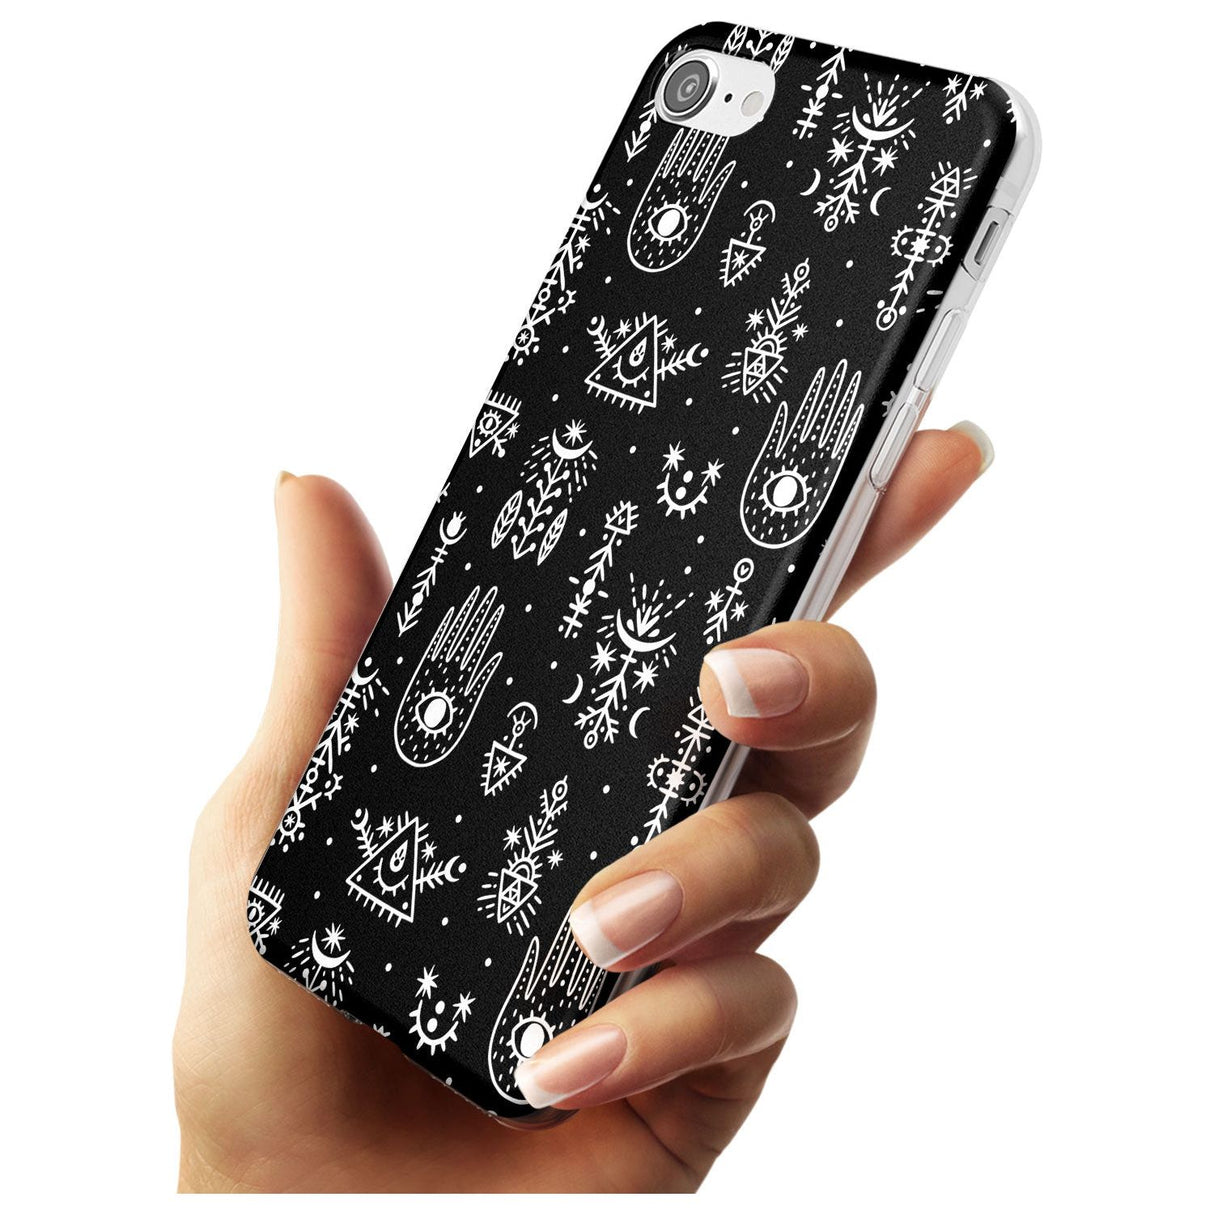 Tribal Palms - White on Black Slim TPU Phone Case for iPhone SE 8 7 Plus